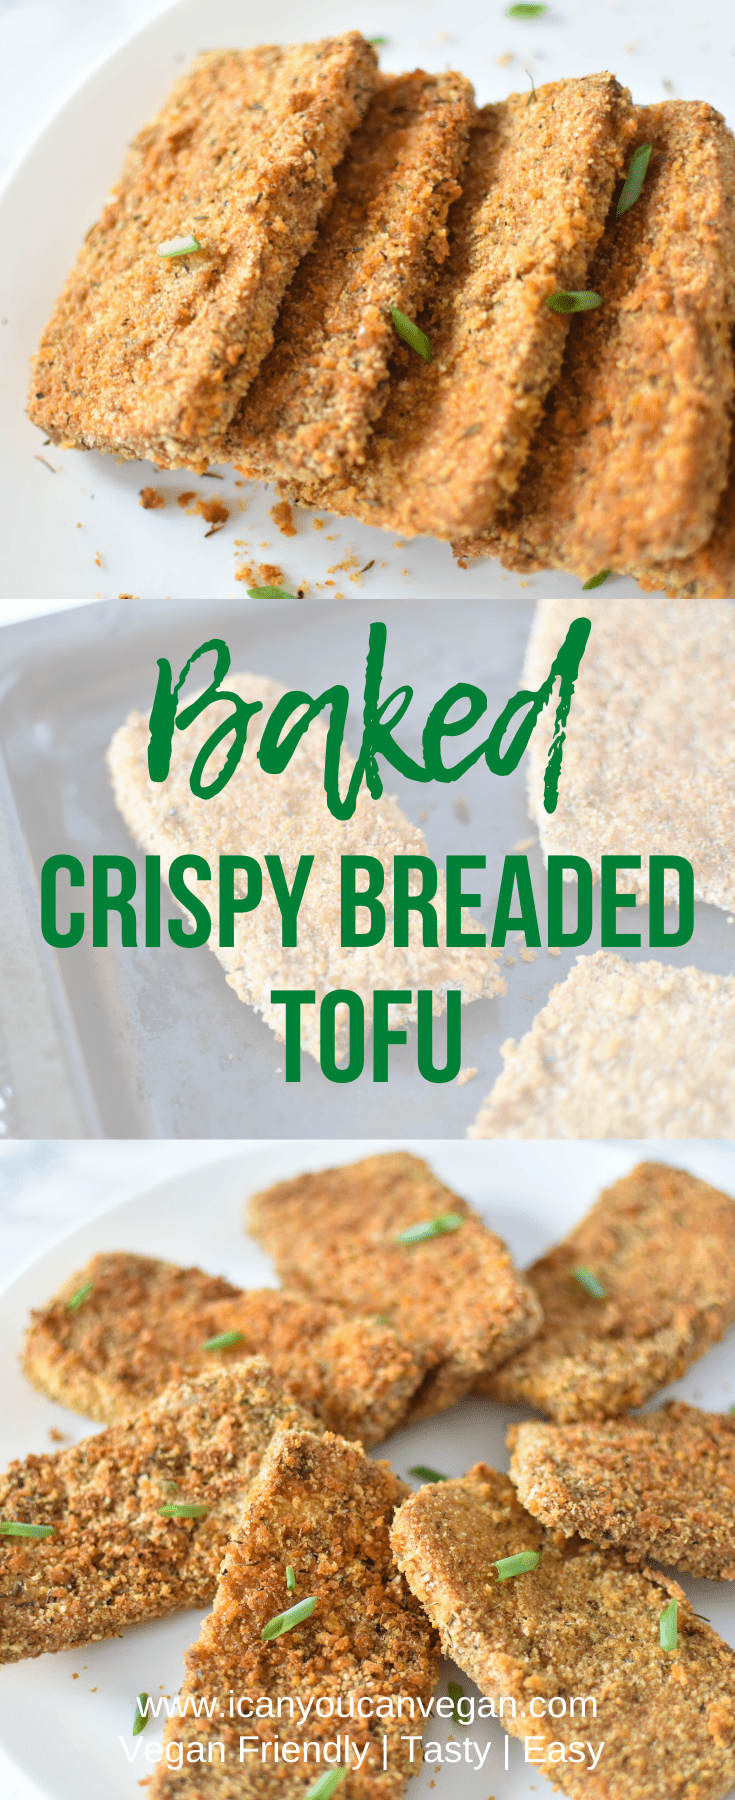 Crispy Baked Breaded Tofu